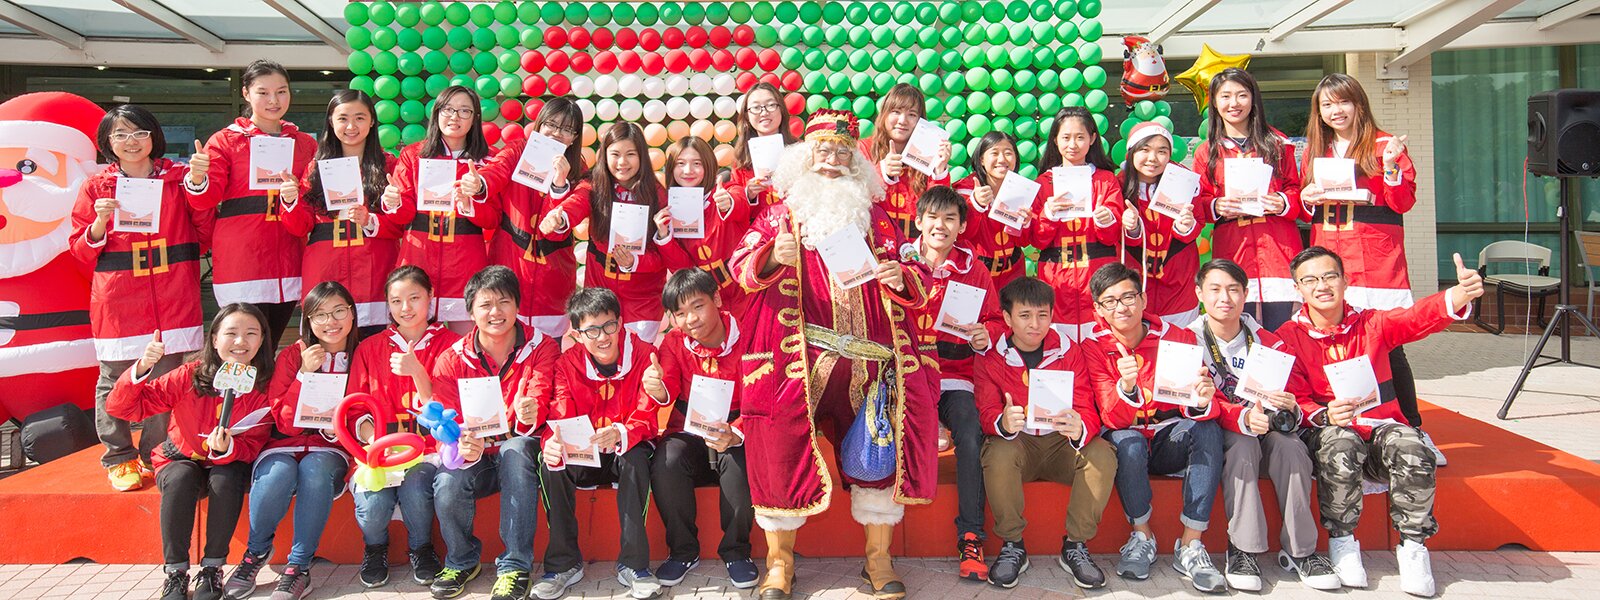 “EdU Santa” to Promote Love and Care